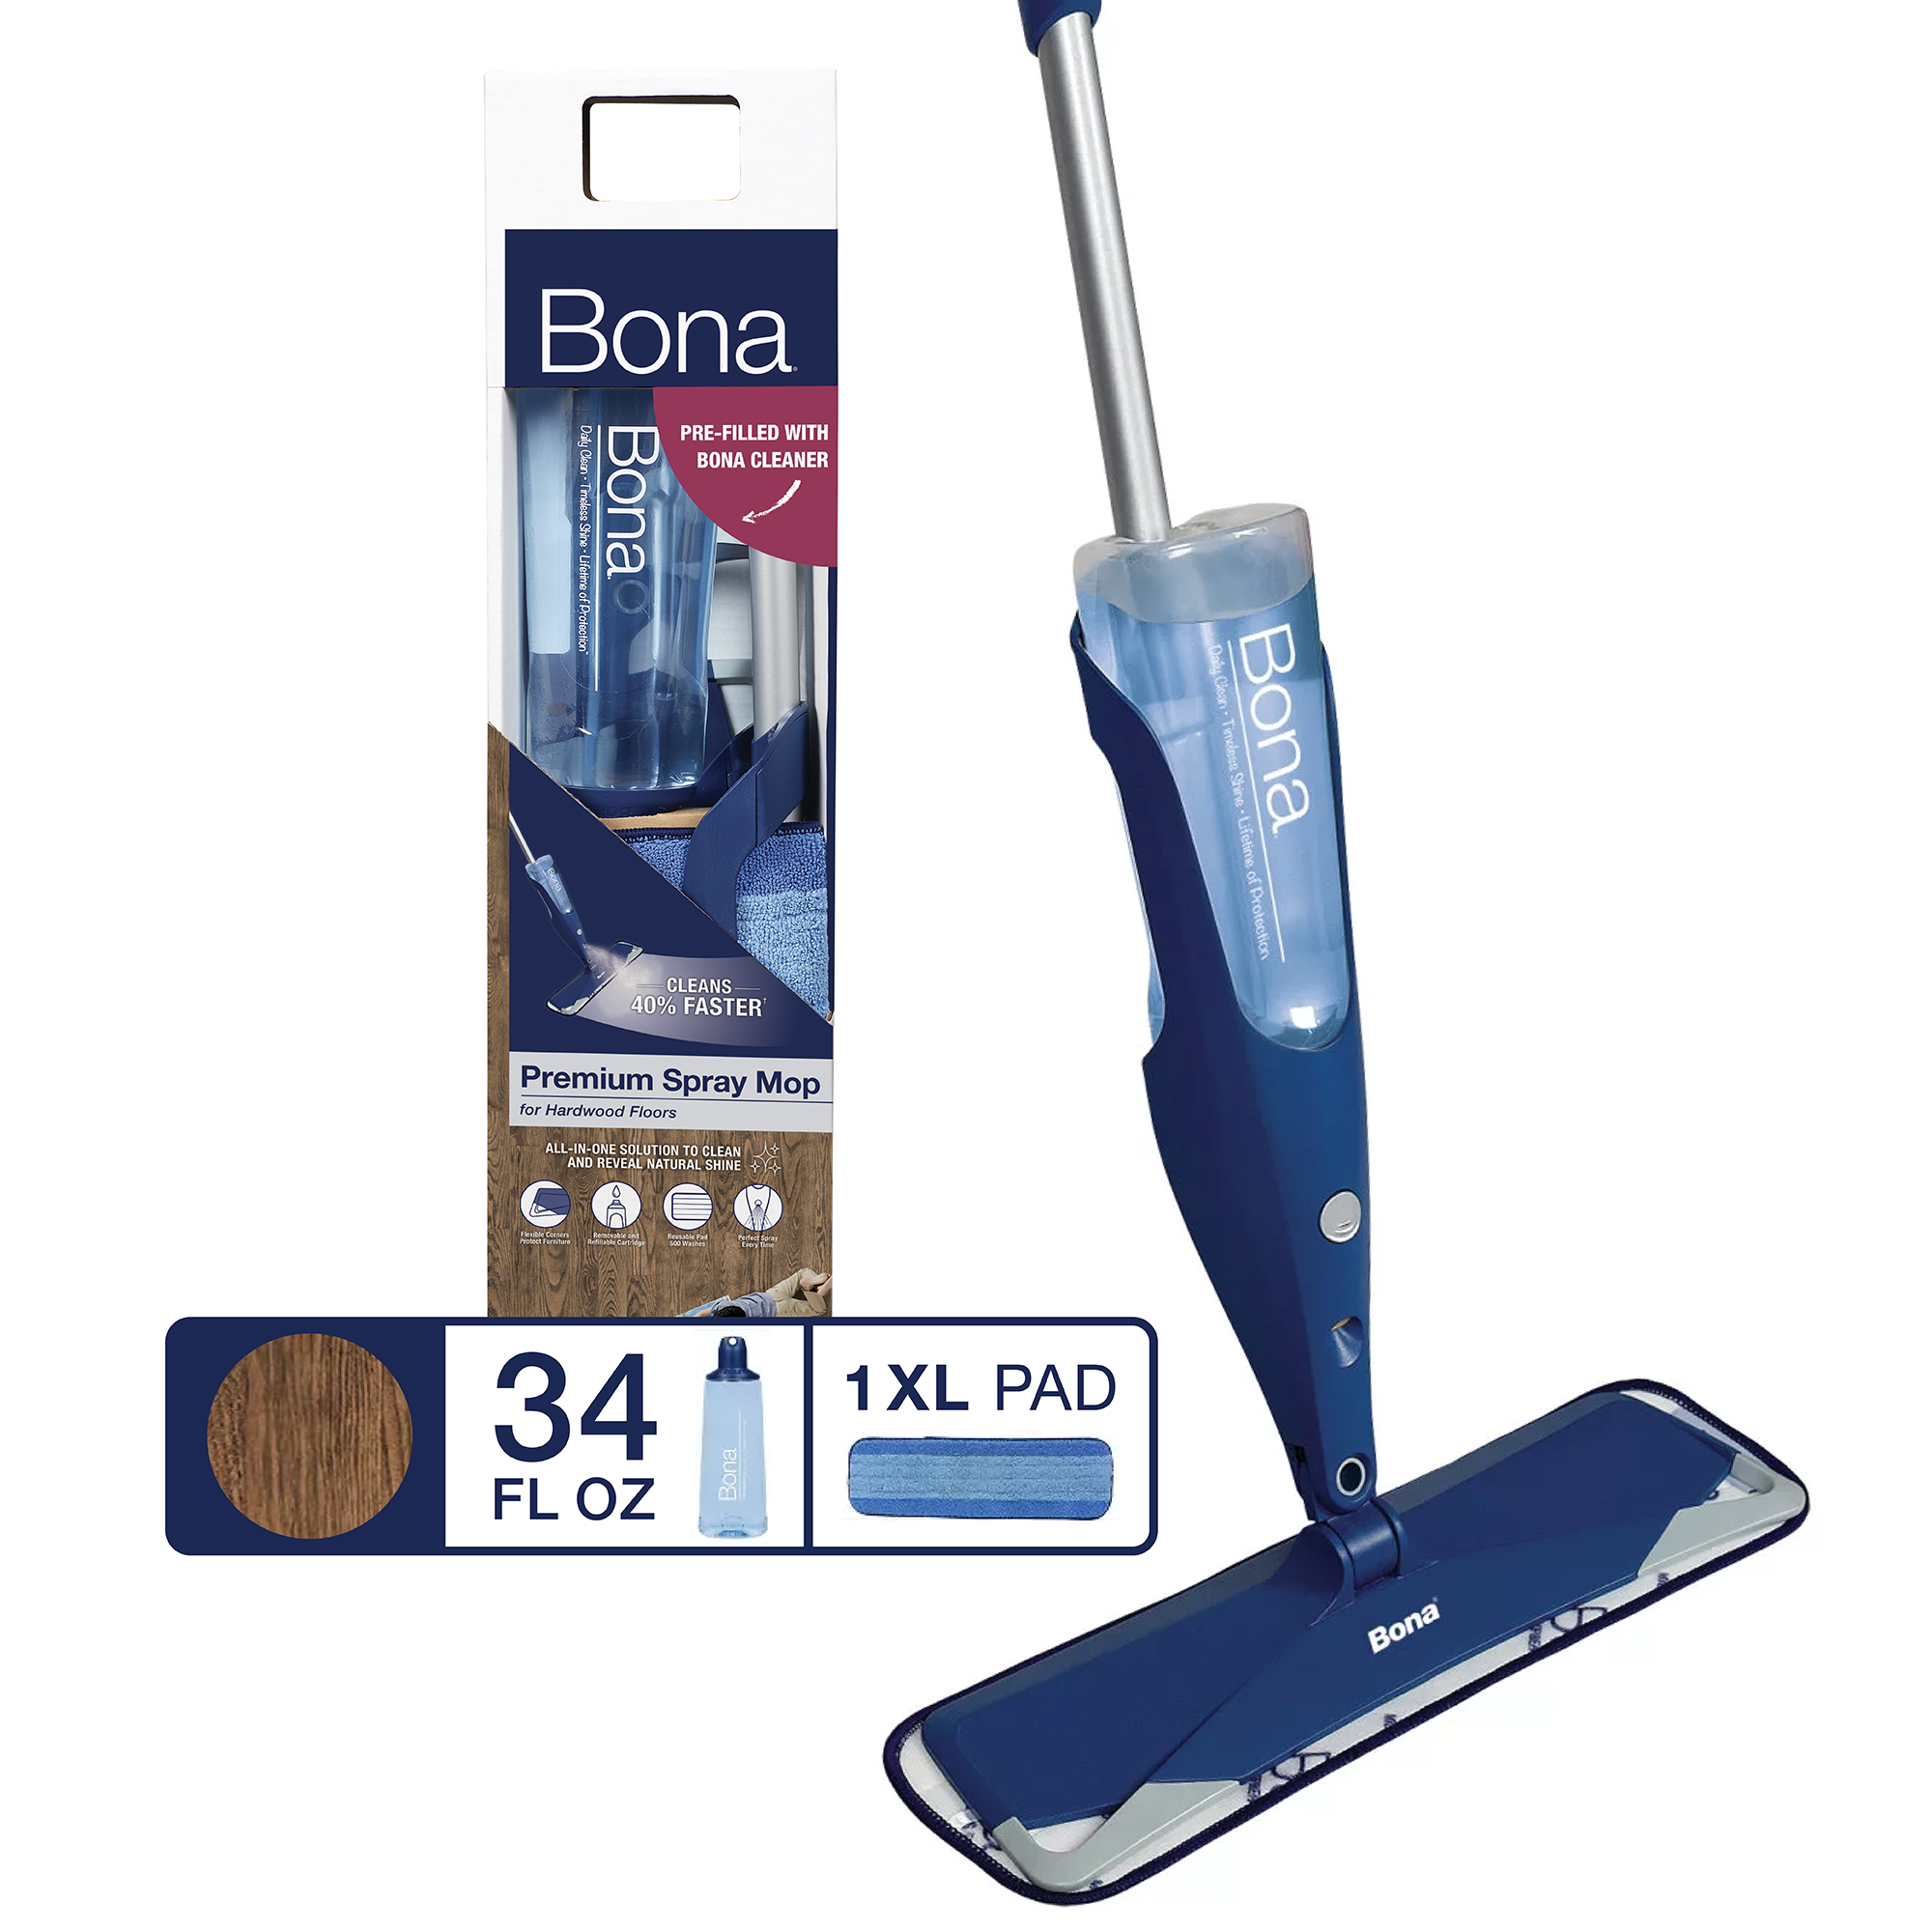 Bona® Premium Spray Mop for Hardwood Floors - image 1 of 13